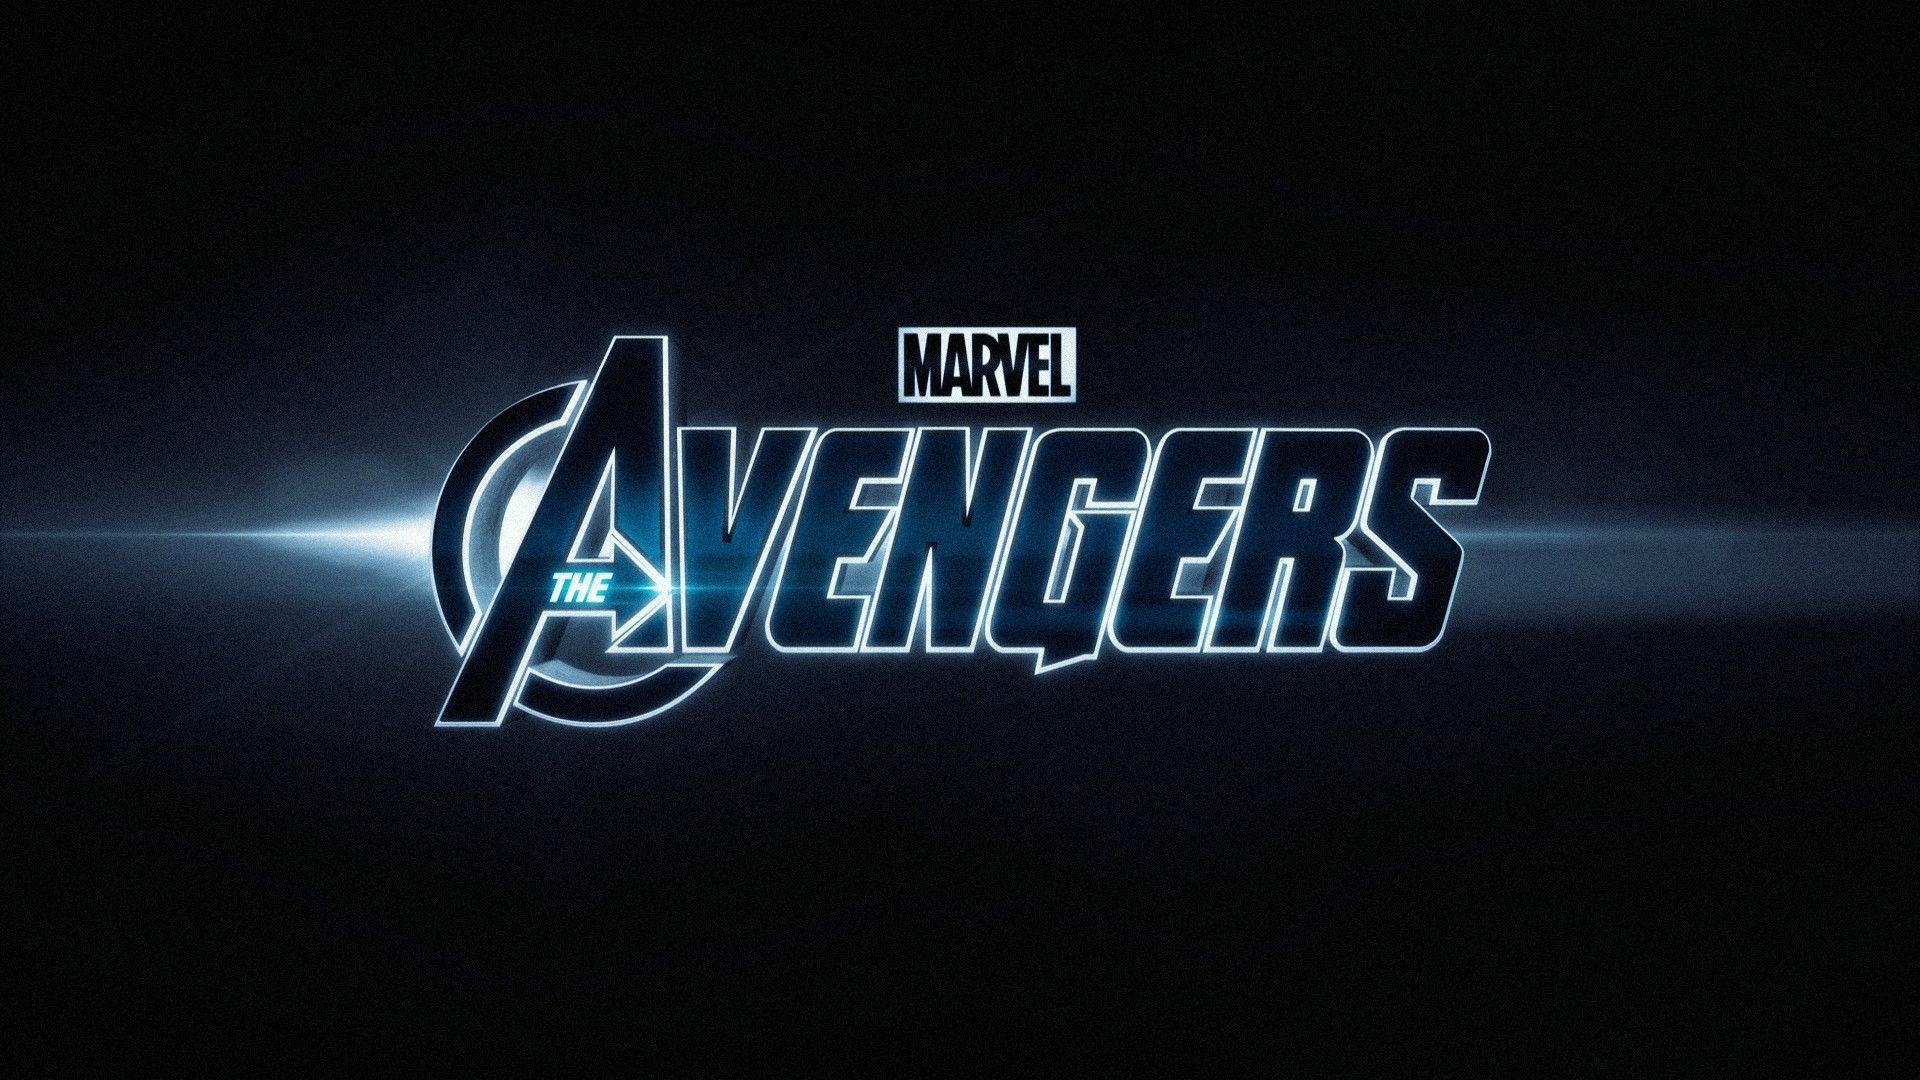 Avengers 5 Will Take Time Explains Kevin Feige